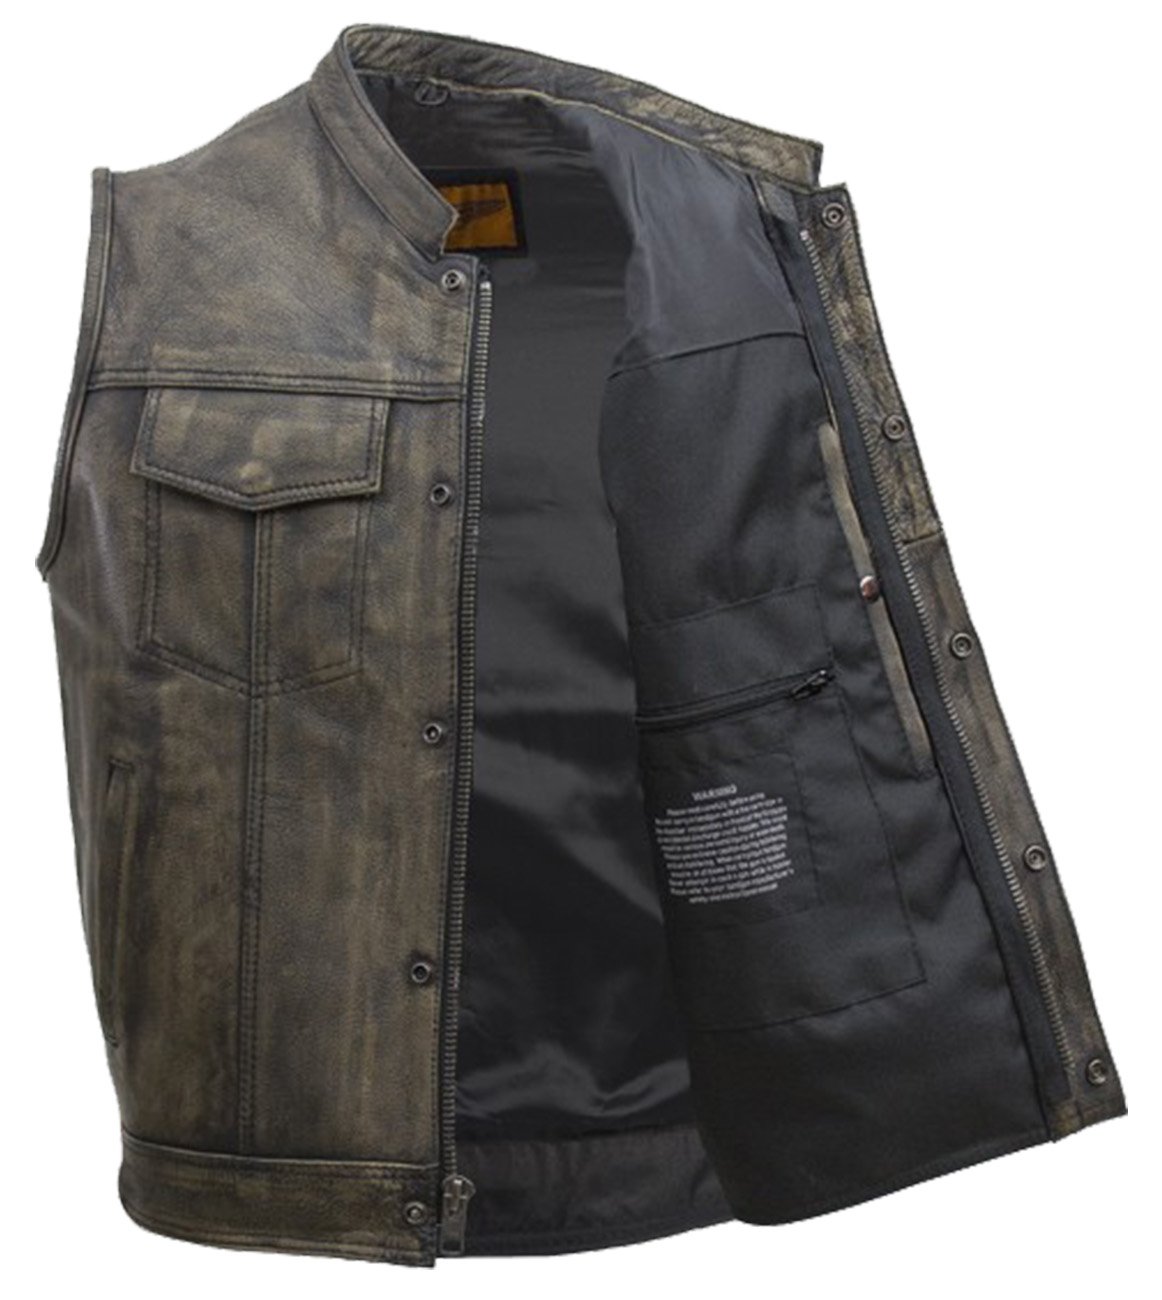 Leather Motorcycle Vest - Men's - Distressed Brown - Club - MV320-ZIP-12-DL